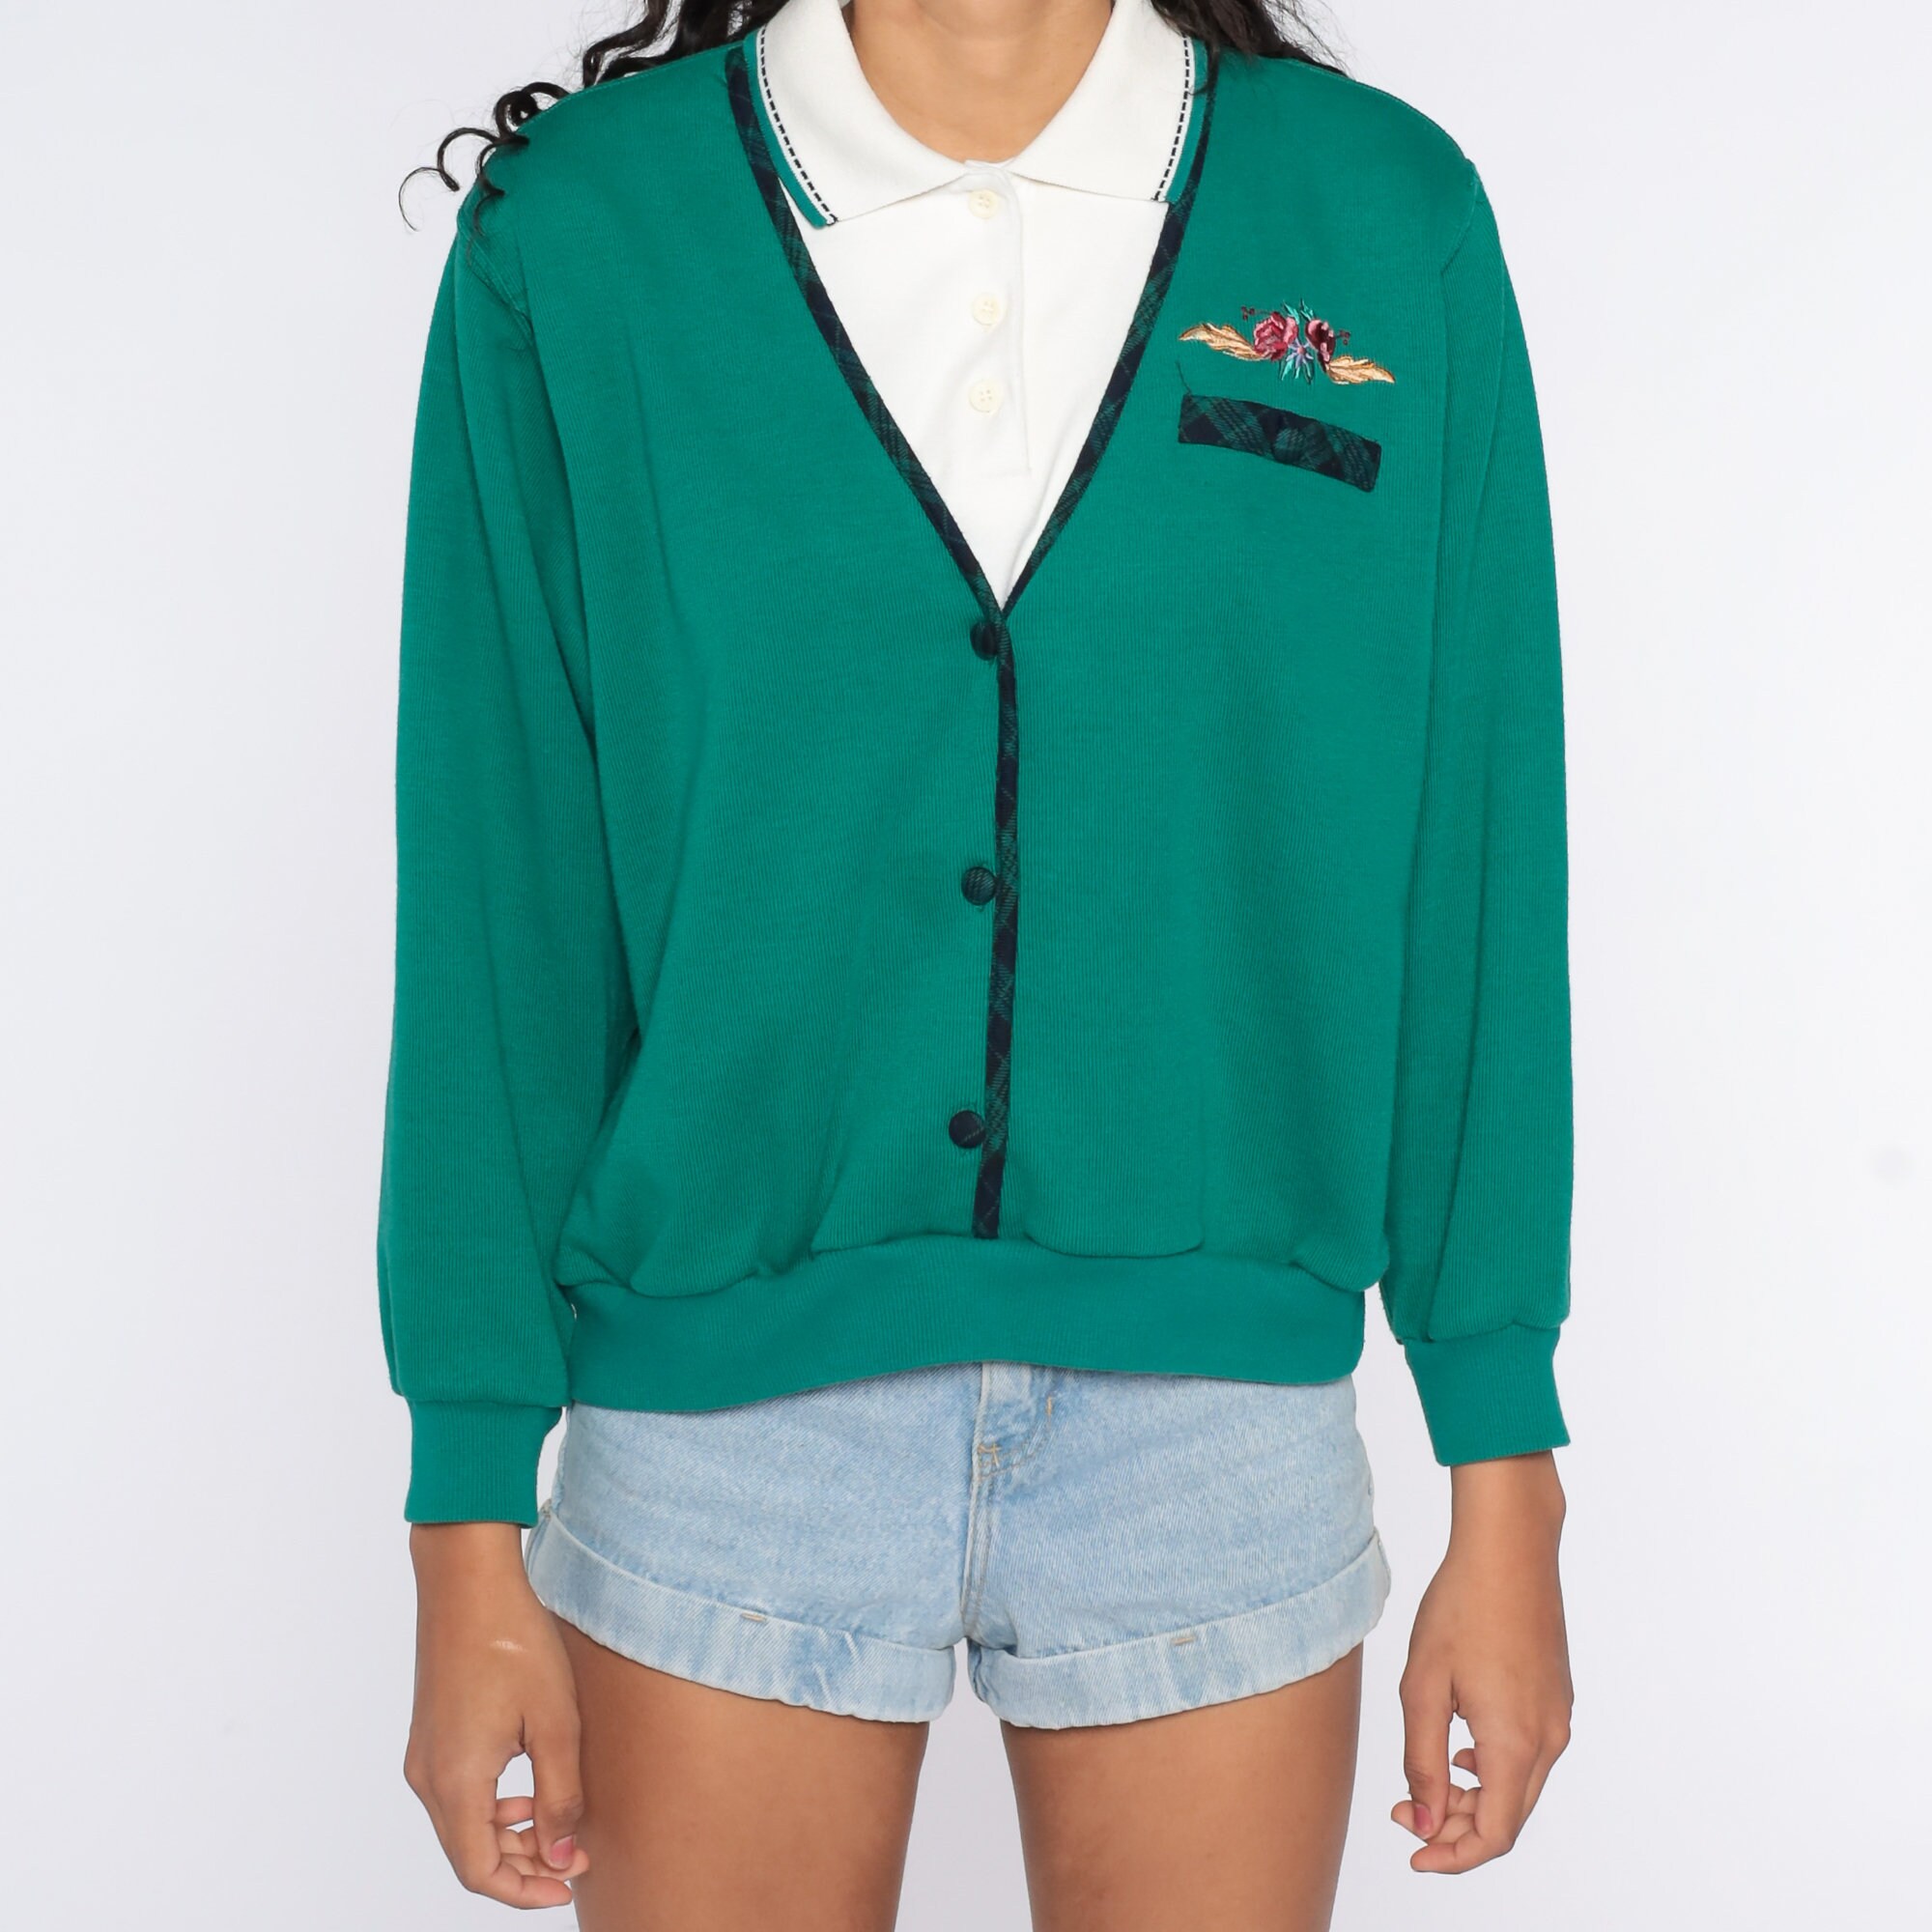 Embroidered Floral Sweatshirt 80s 2fer Sweater Green Nerd Sweatshirt ...